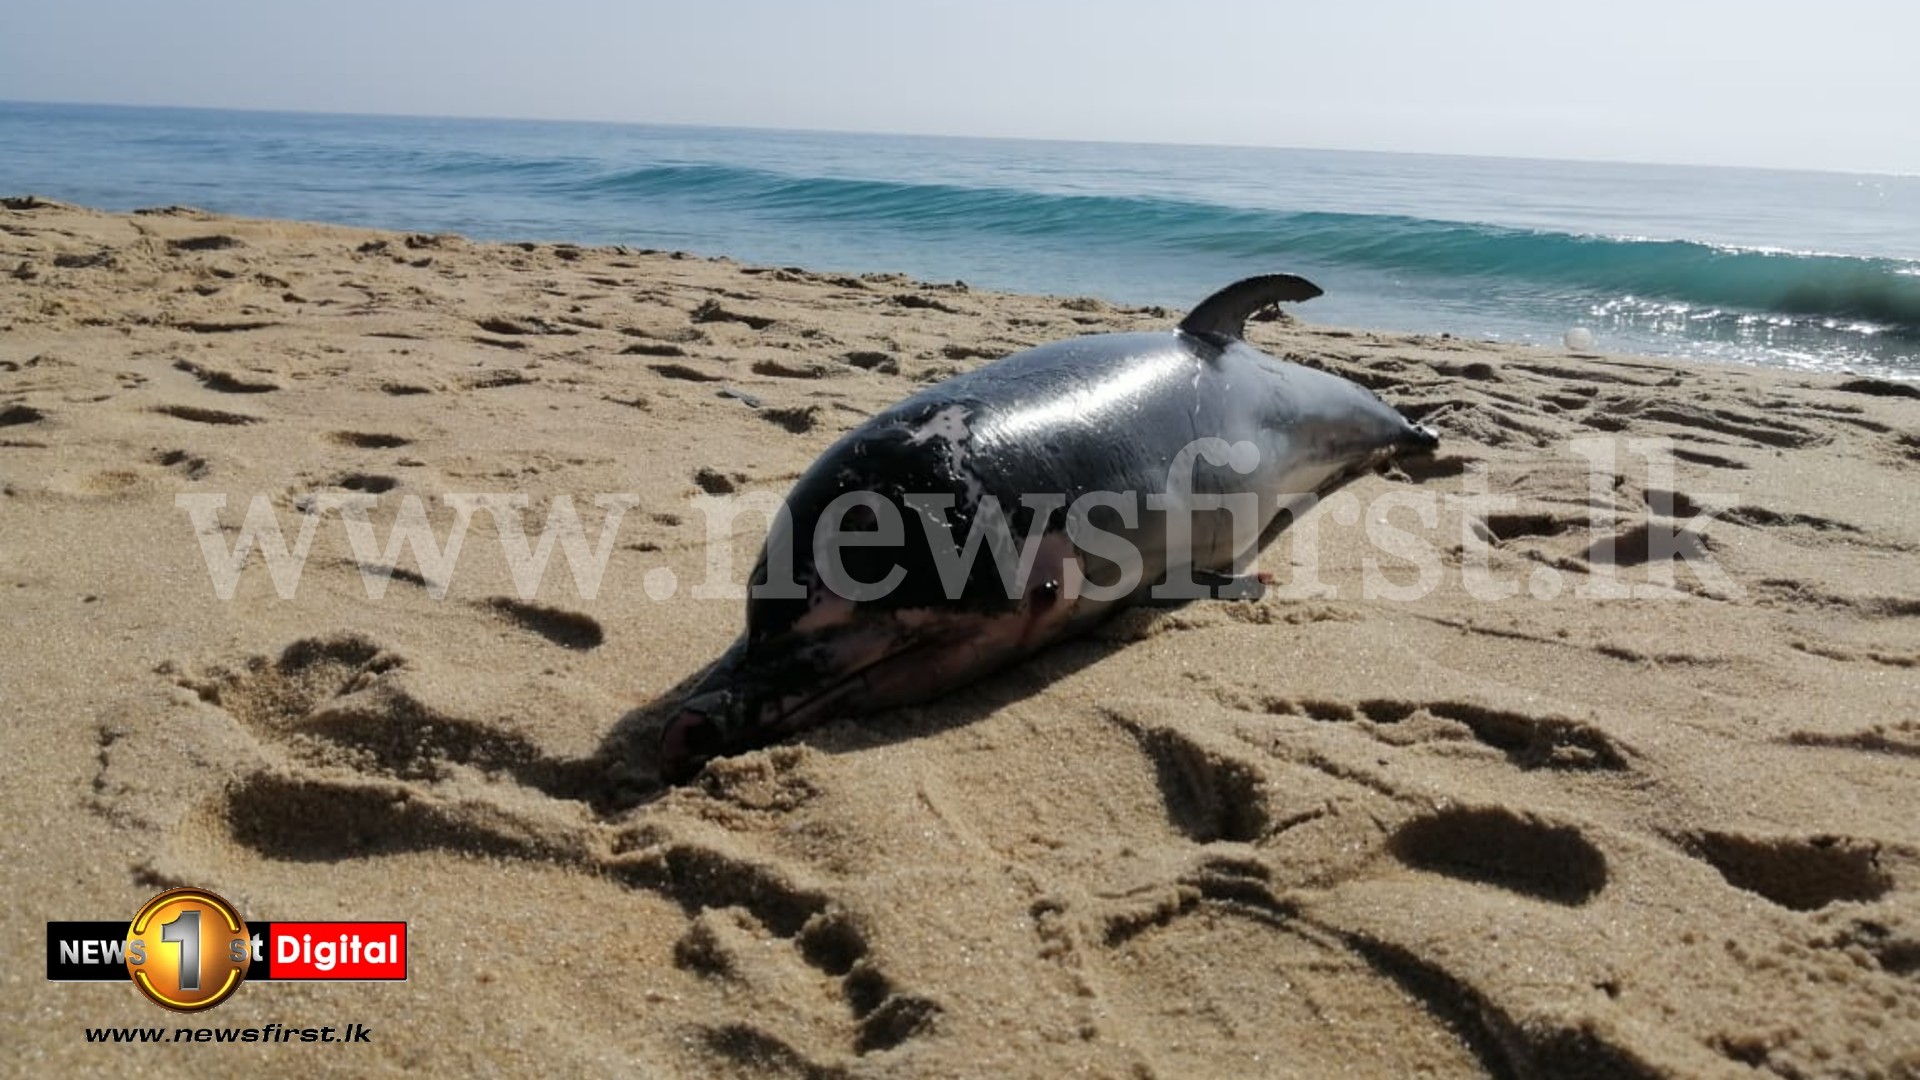 Sri Lanka to send dead sea turtle samples overseas to determine exact cause of death